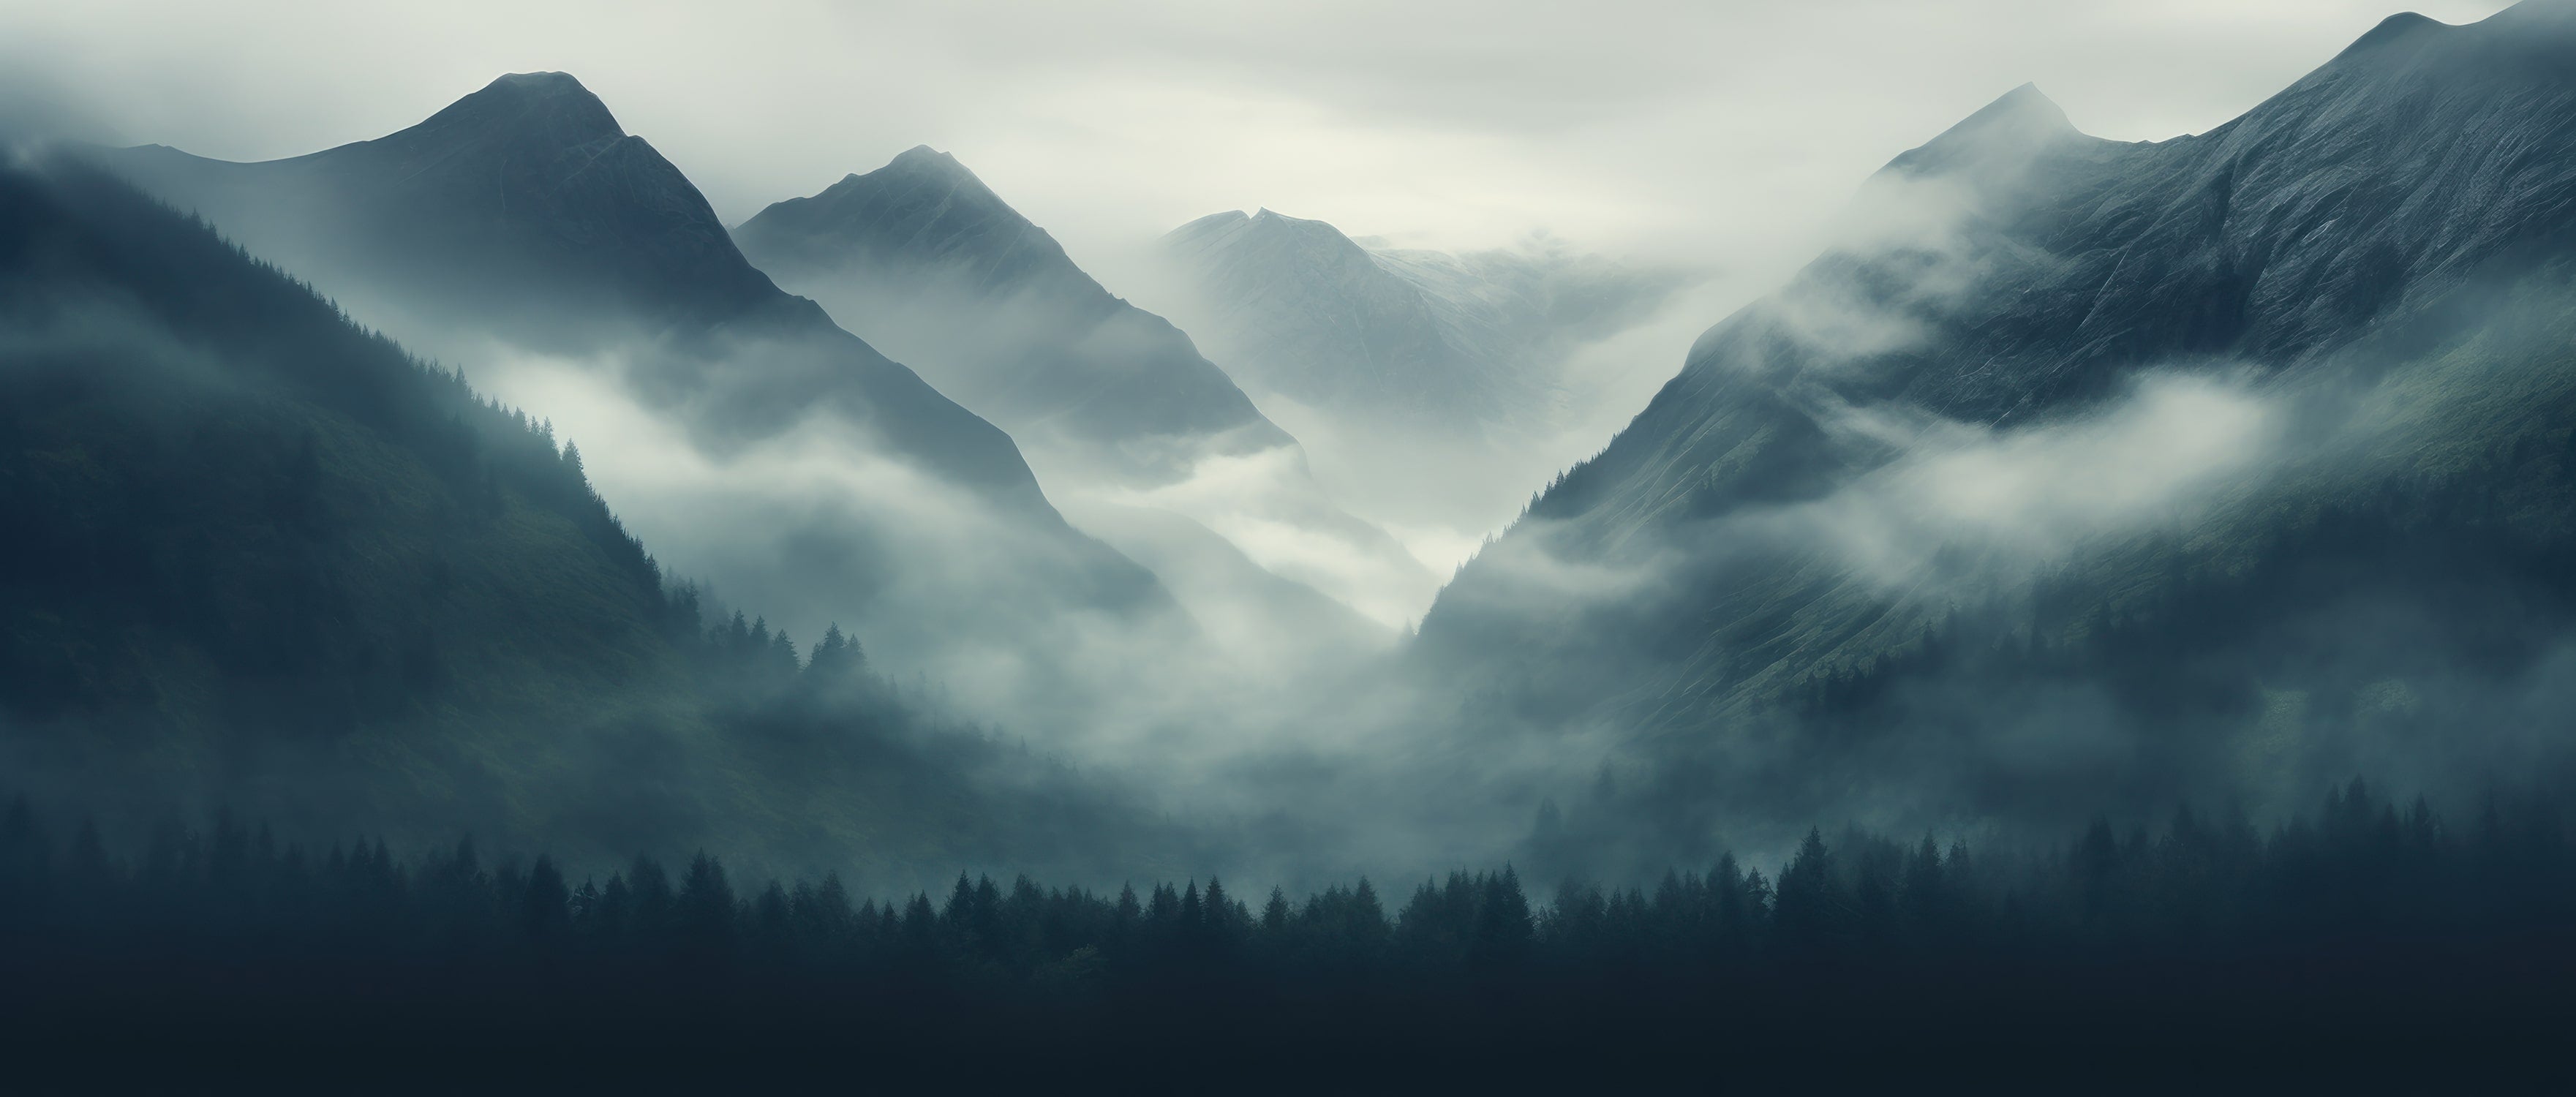 misty-mountain-backdrop-adding-mystery-scene-min.jpg